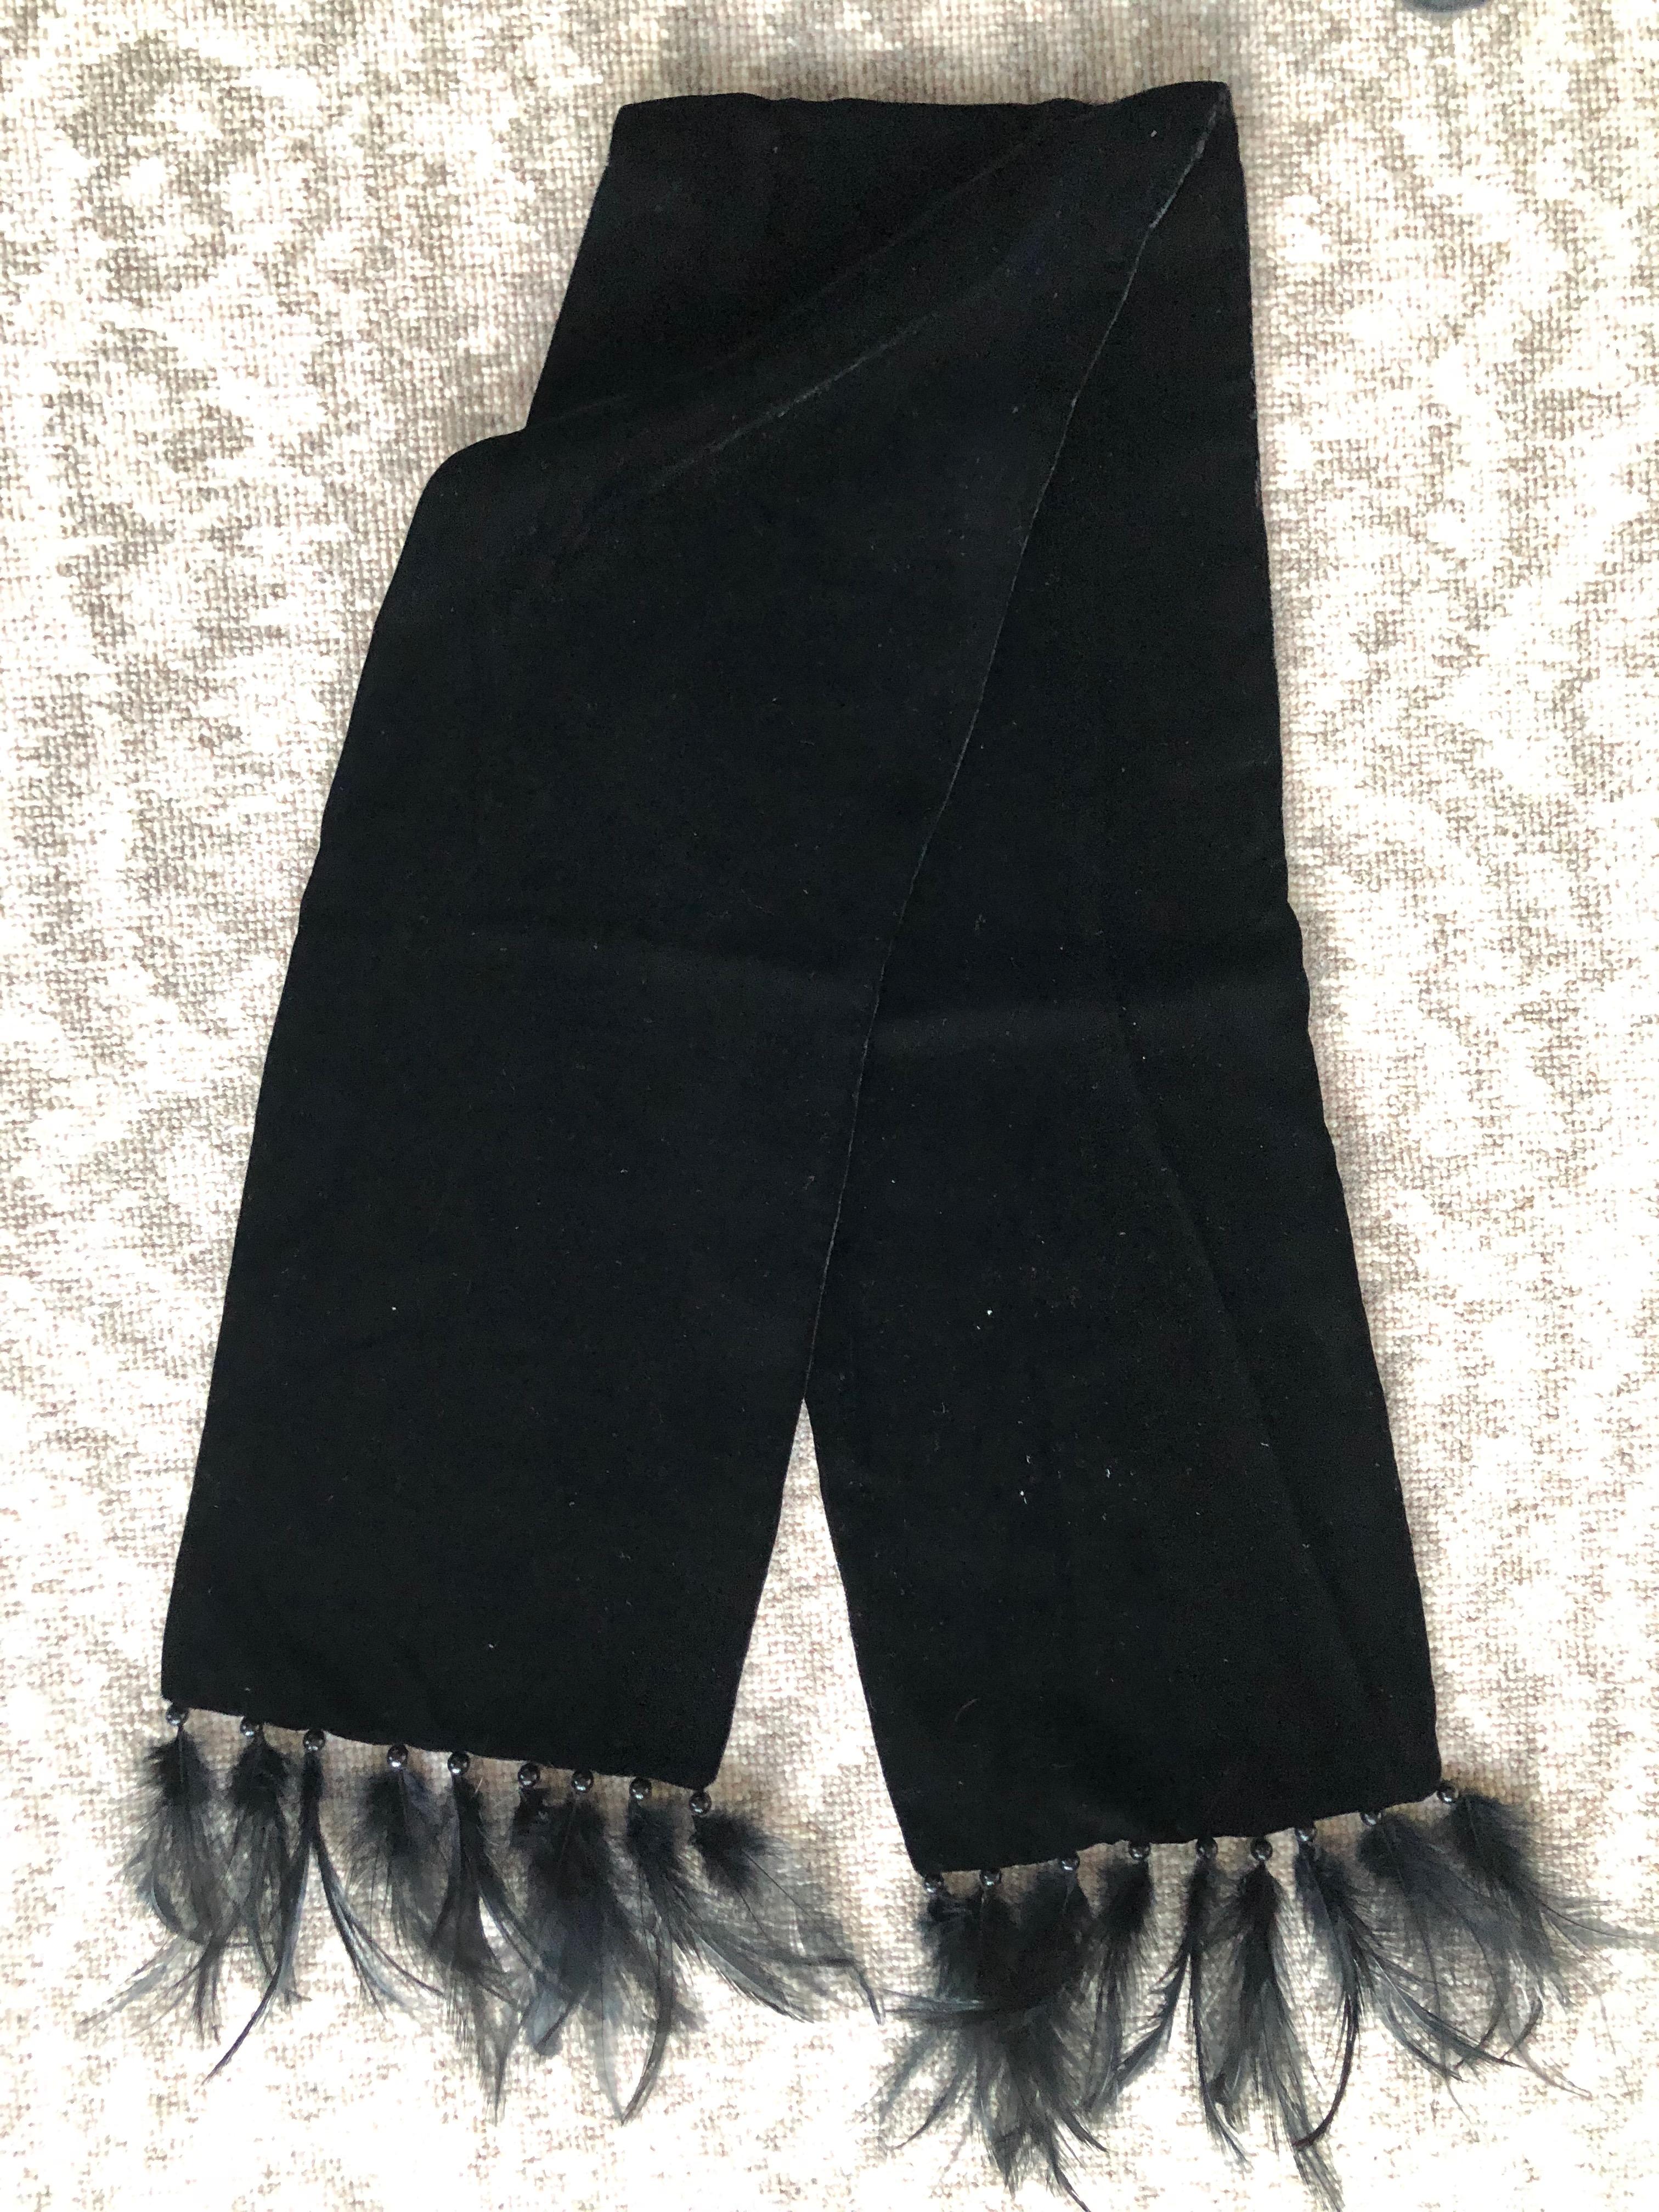 Yves Saint Laurent Rive Guache Vintage Black Velvet Scarf with Feather Accents For Sale 1